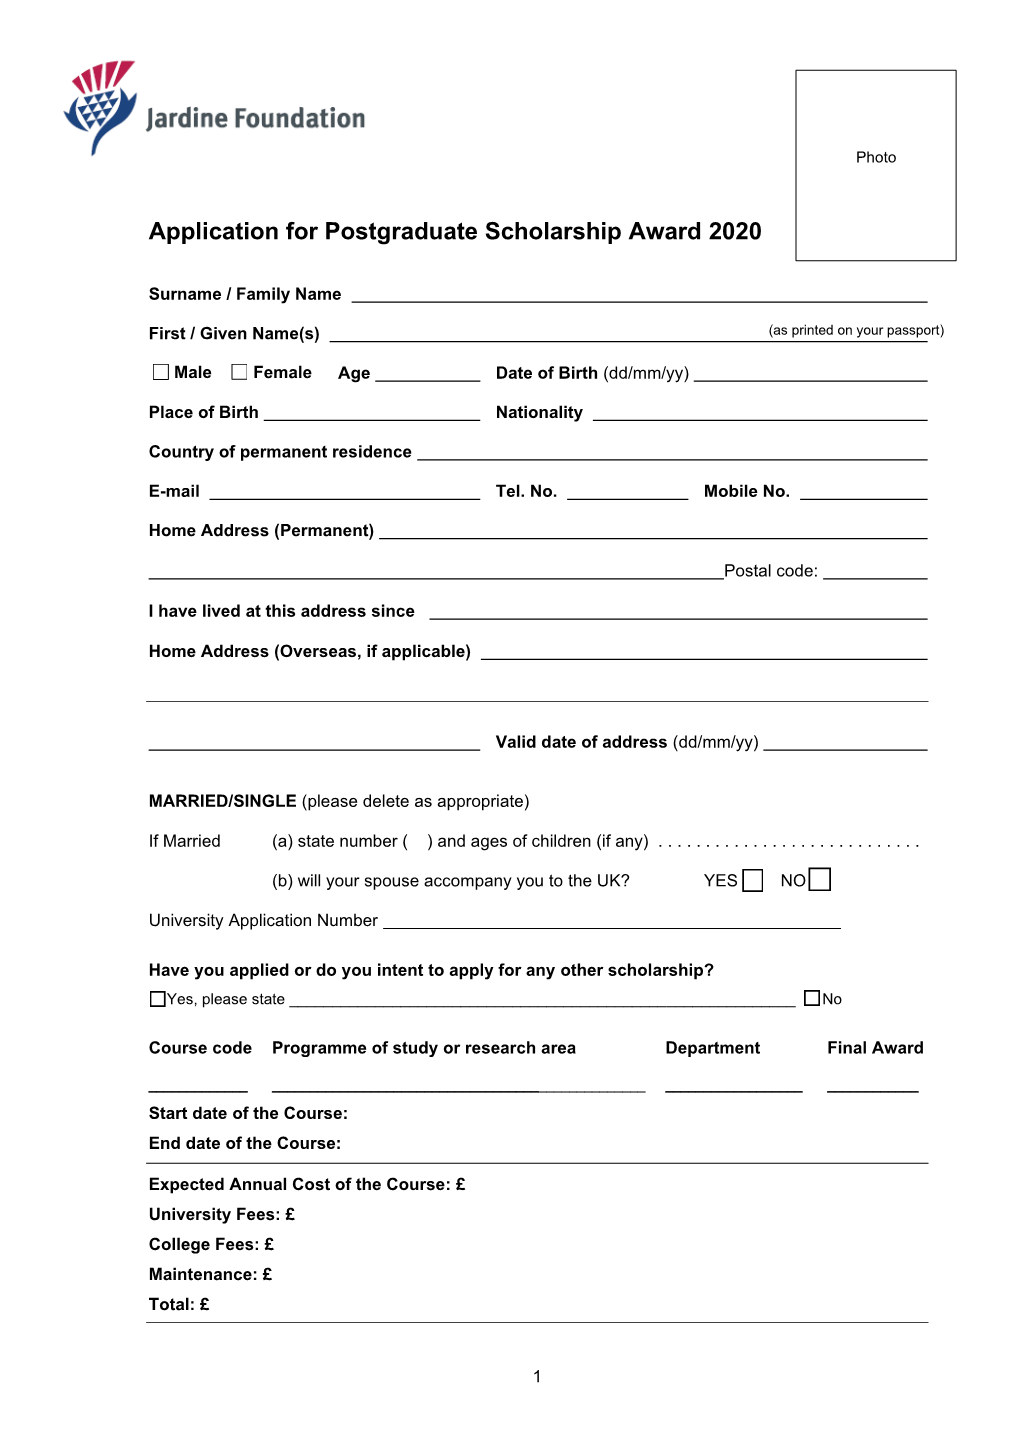 Application for Postgraduate Scholarship Award 2020